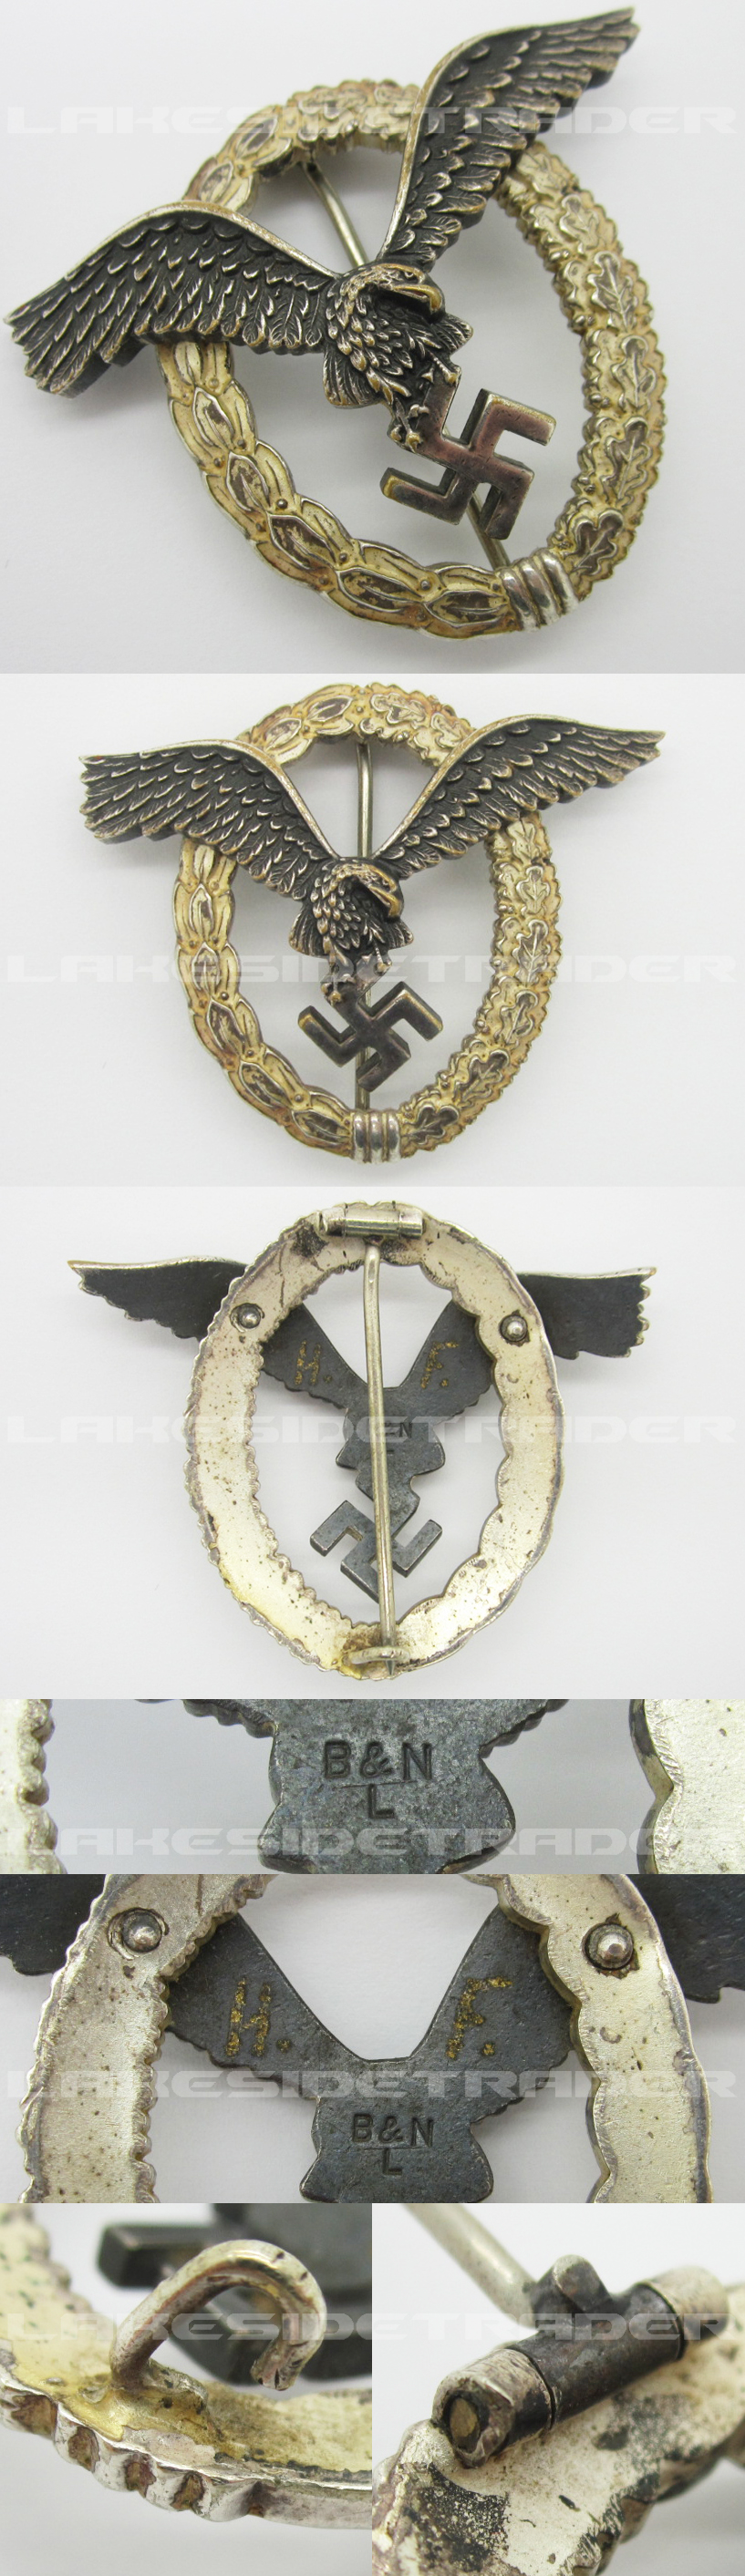 Luftwaffe Pilot Badge by B&N L